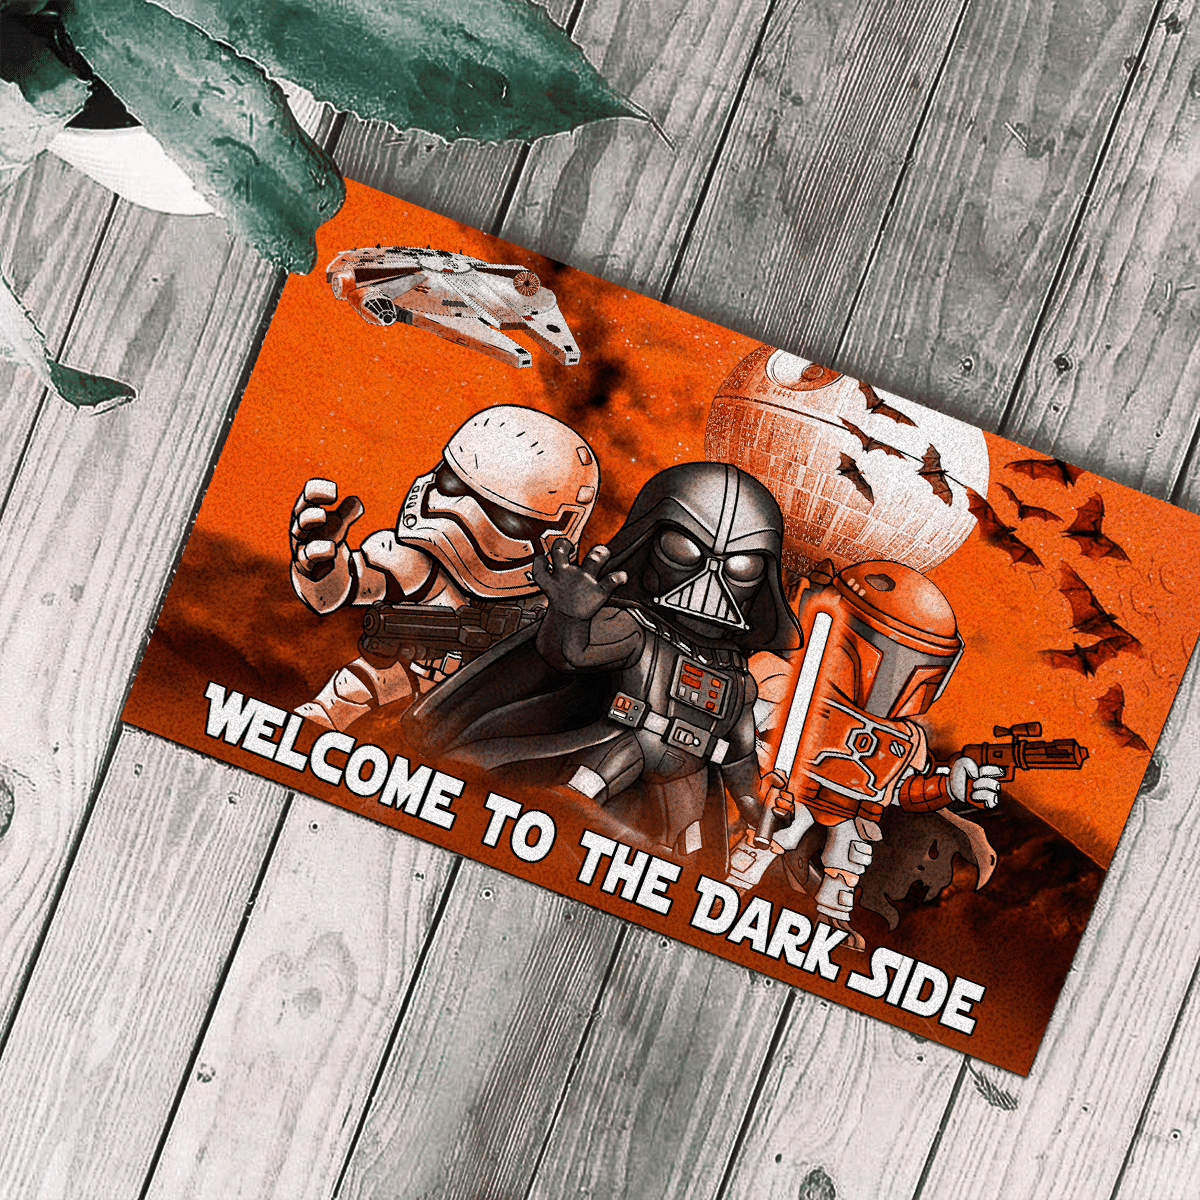 Star Wars Darth Vader Stormtrooper Boba Fett Welcome to the dark side doormart 1